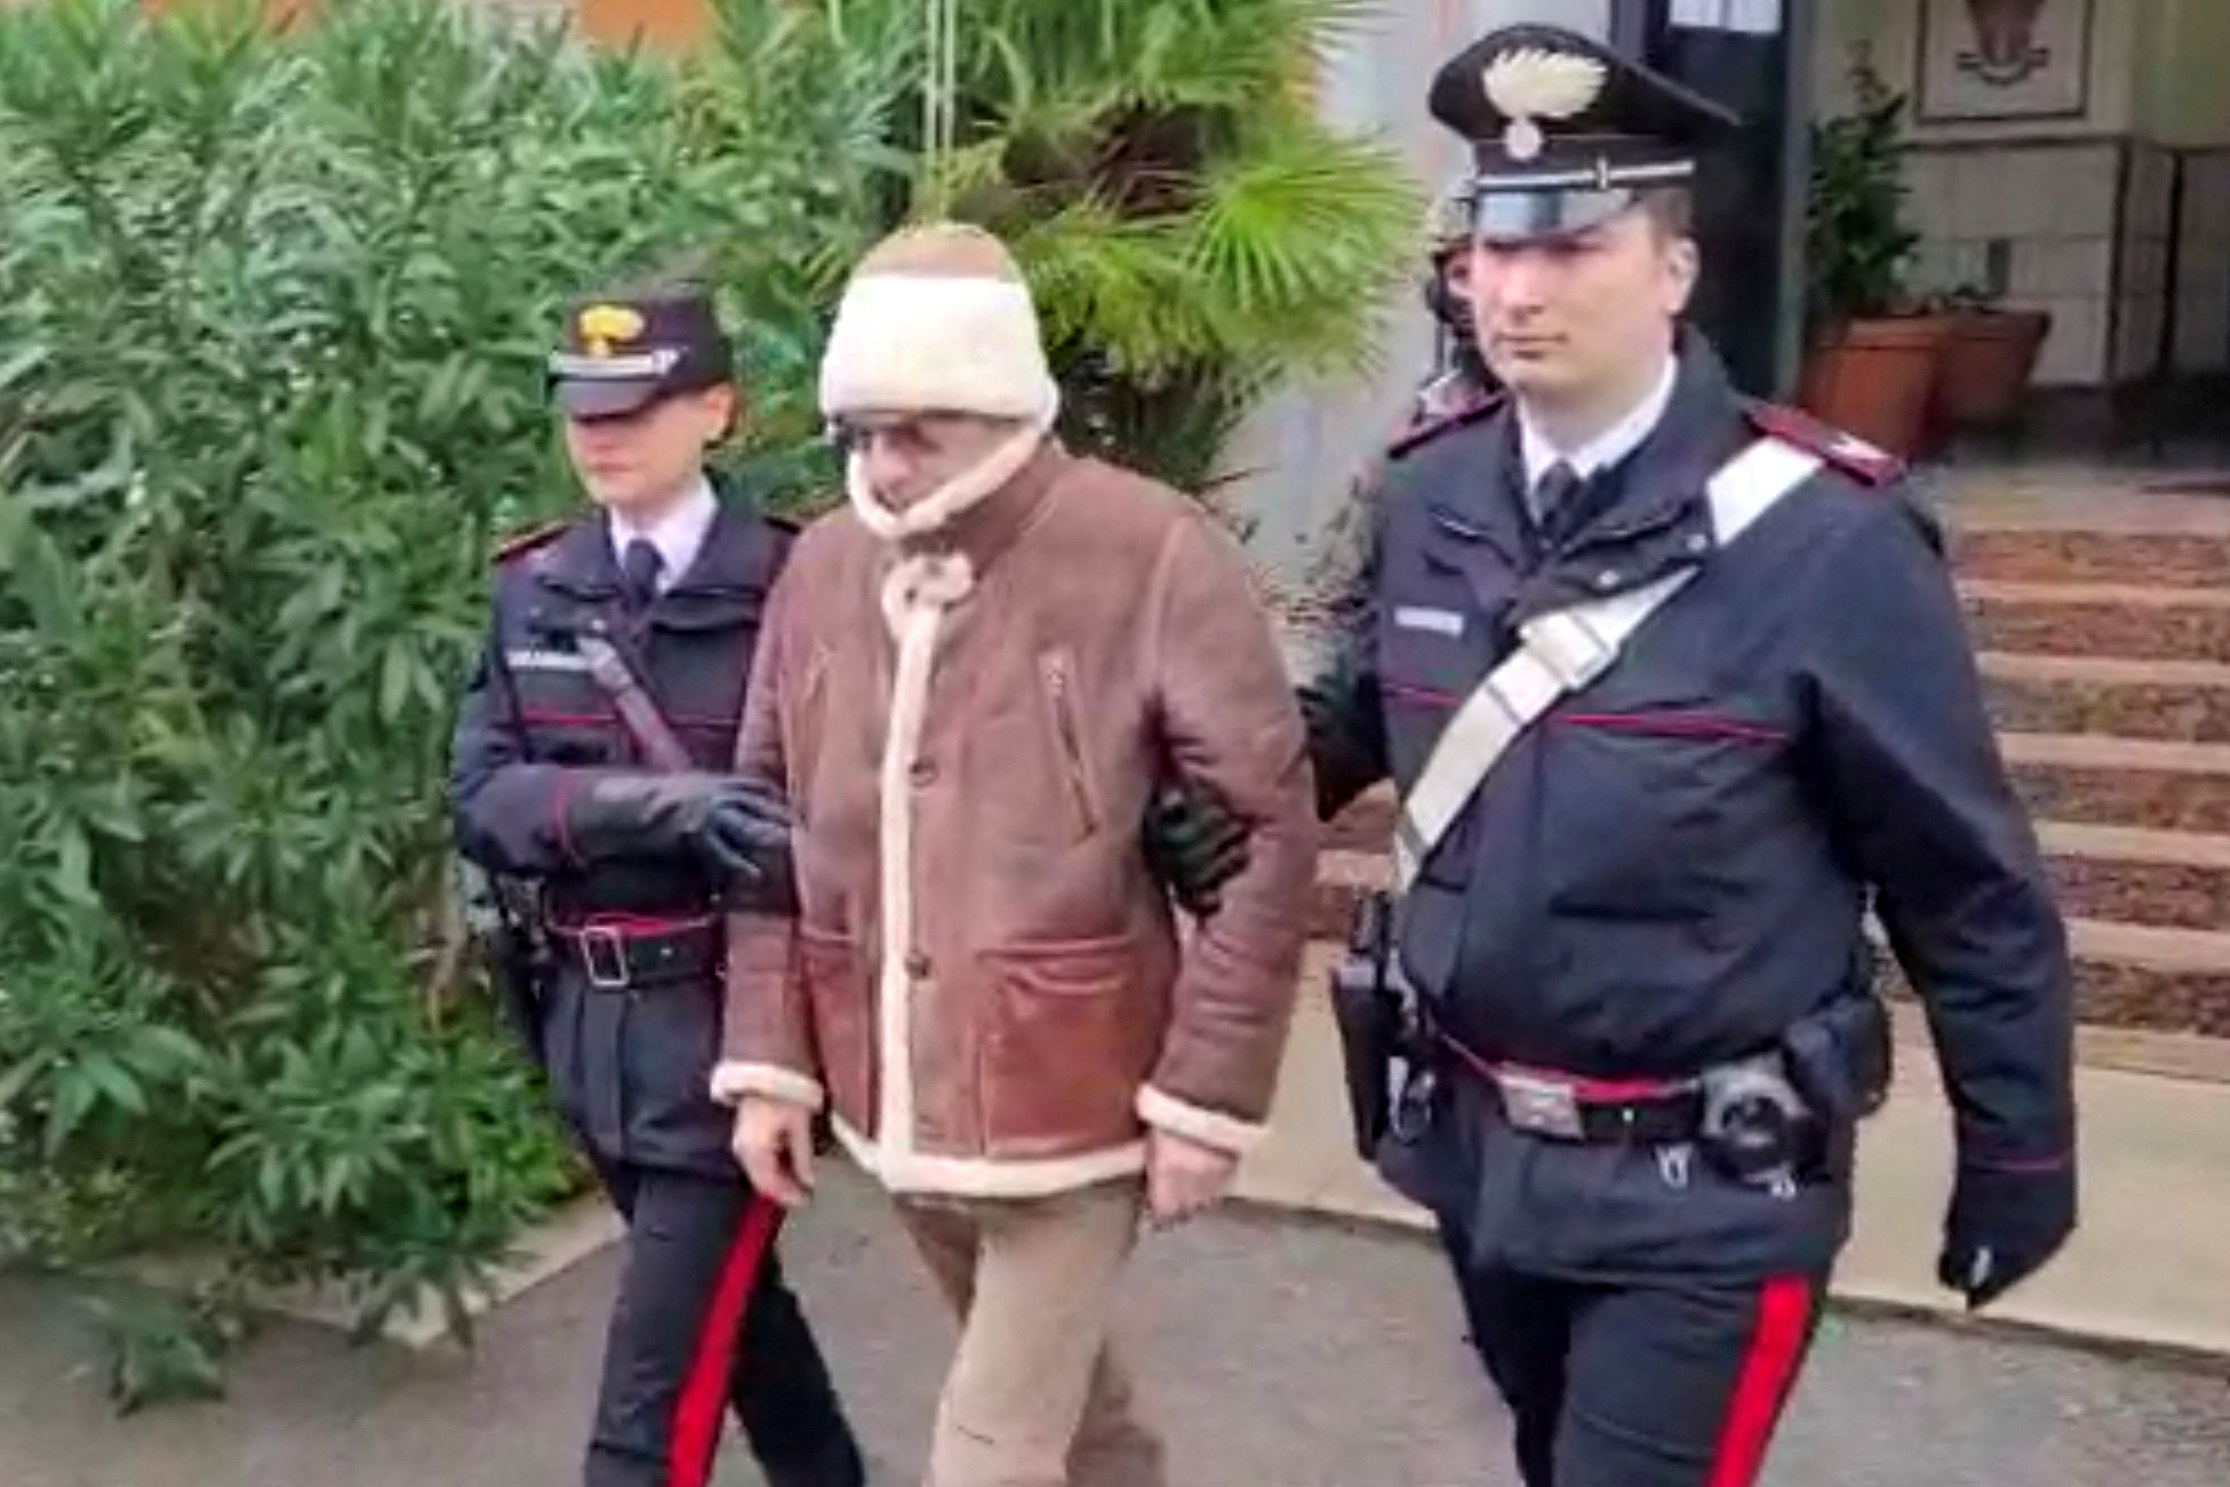 The arrest of Mafia boss Matteo Messina Denaro